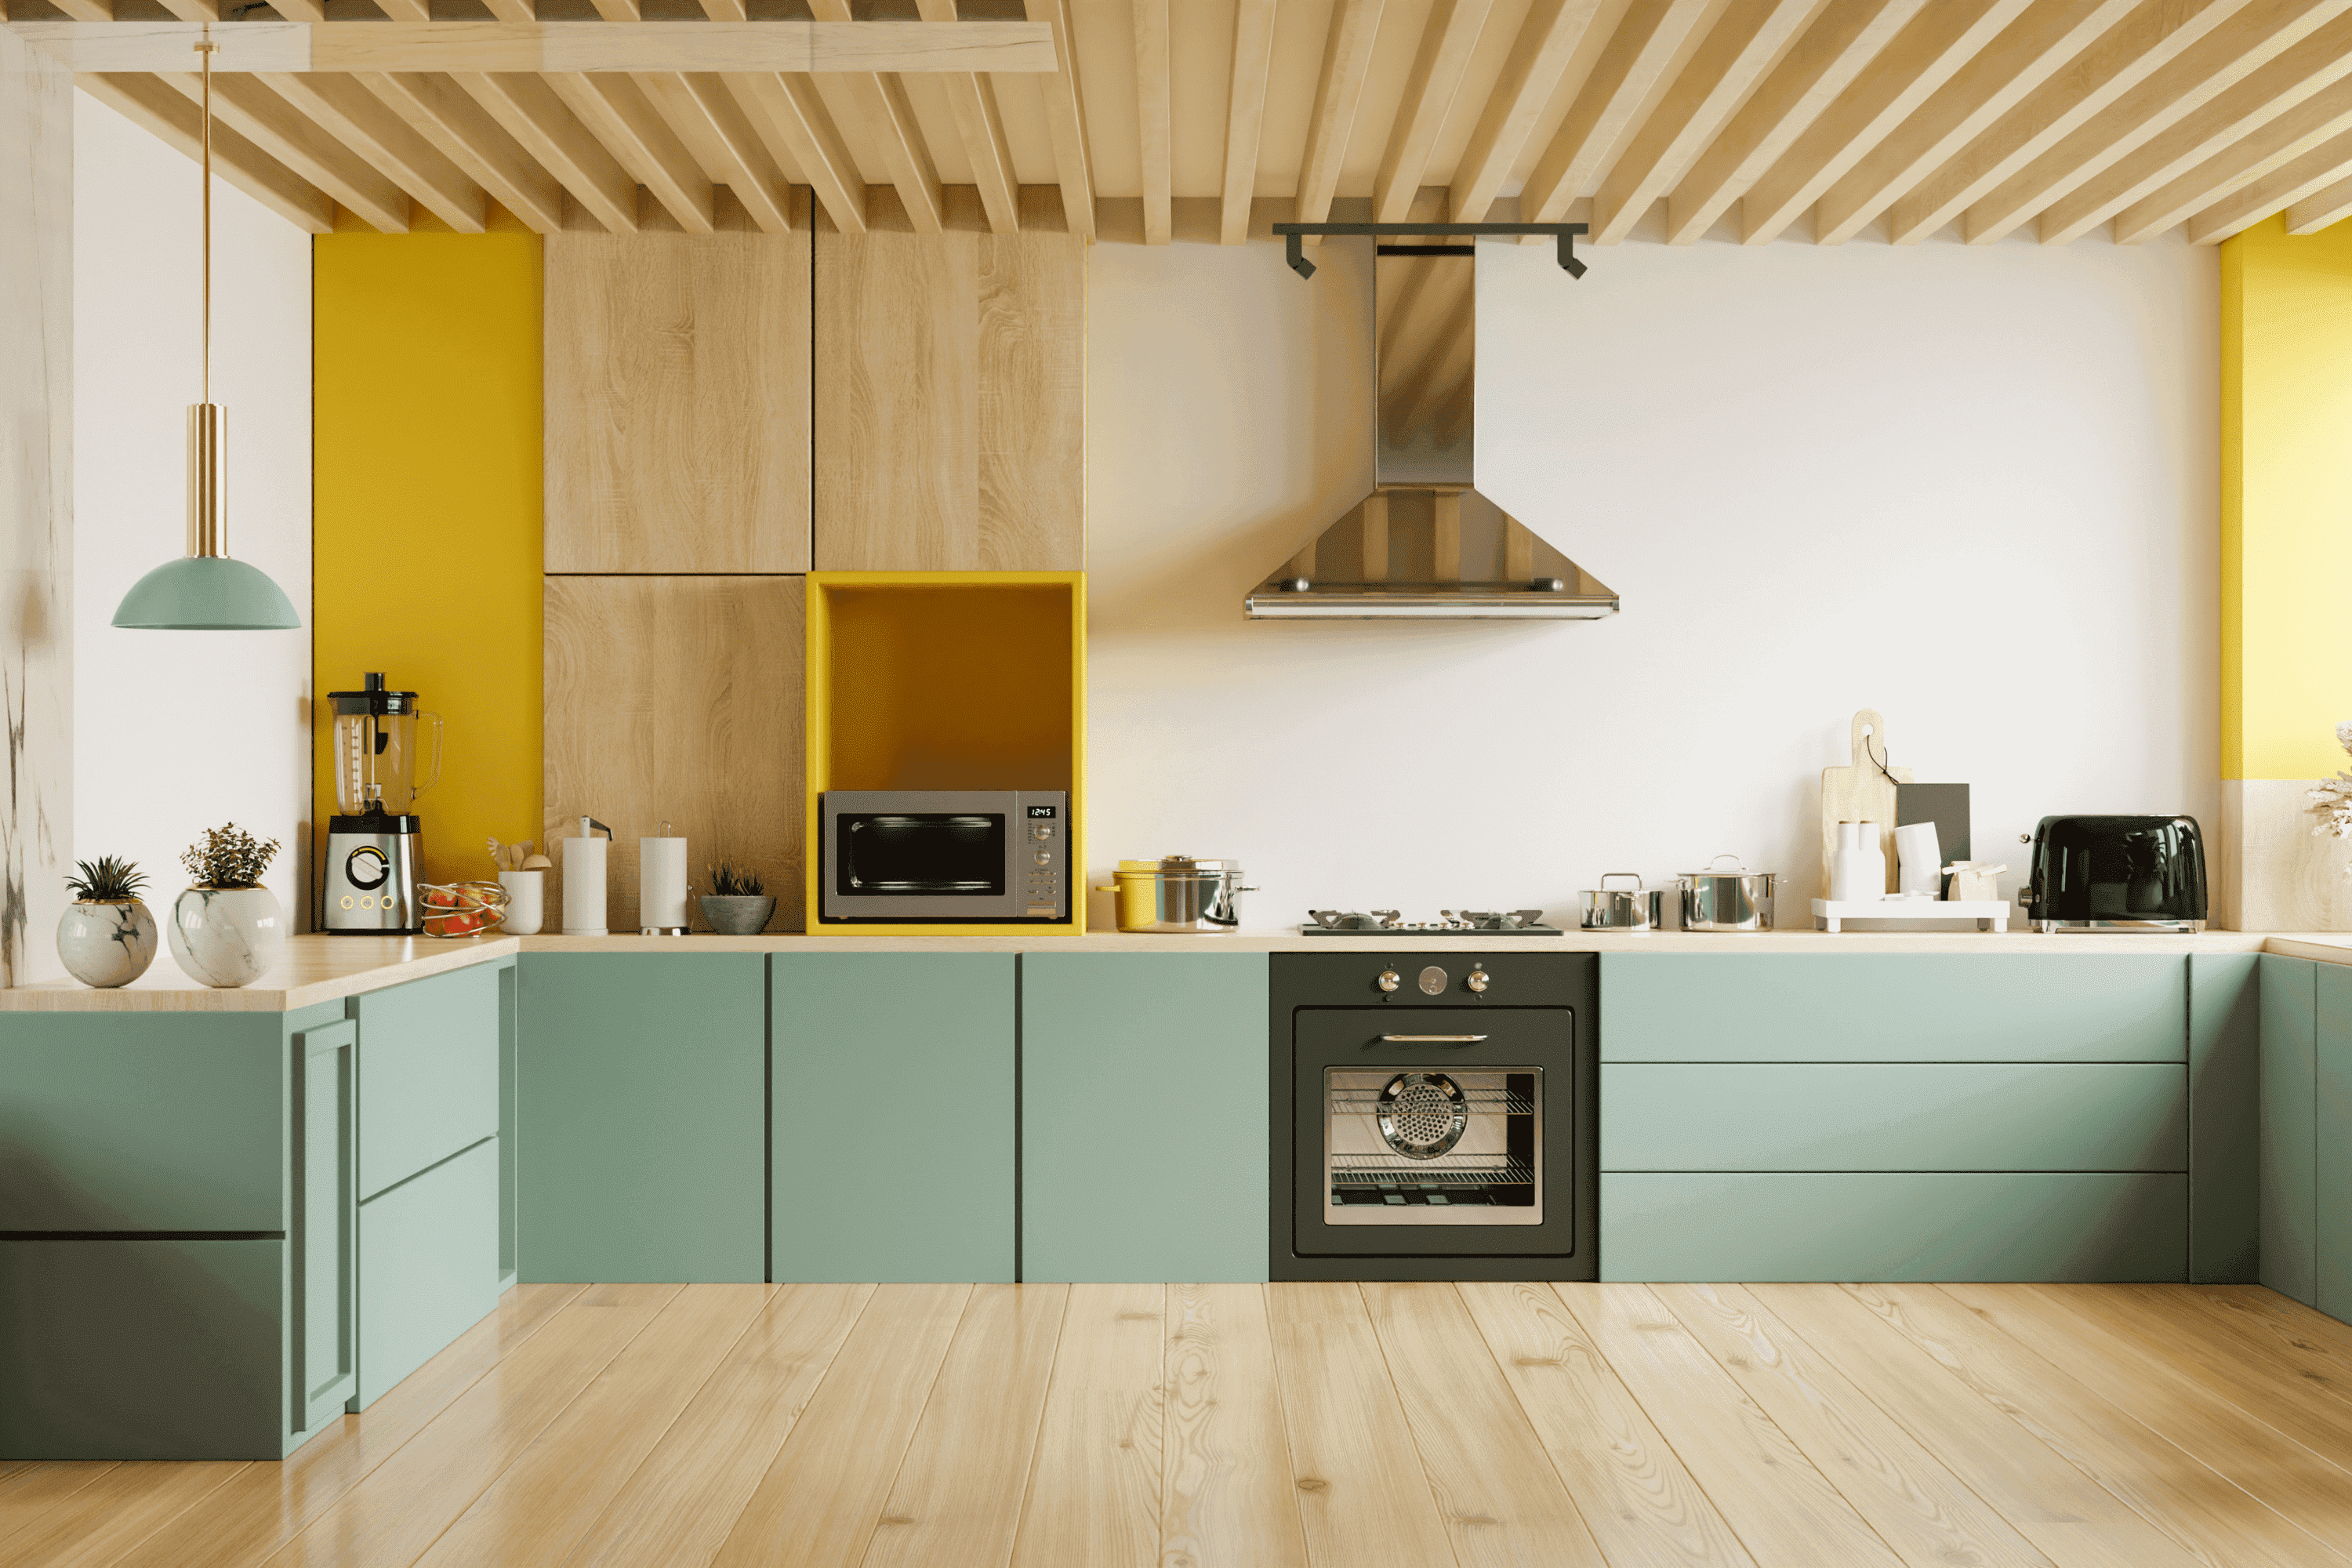 Modular Kitchen Design Image